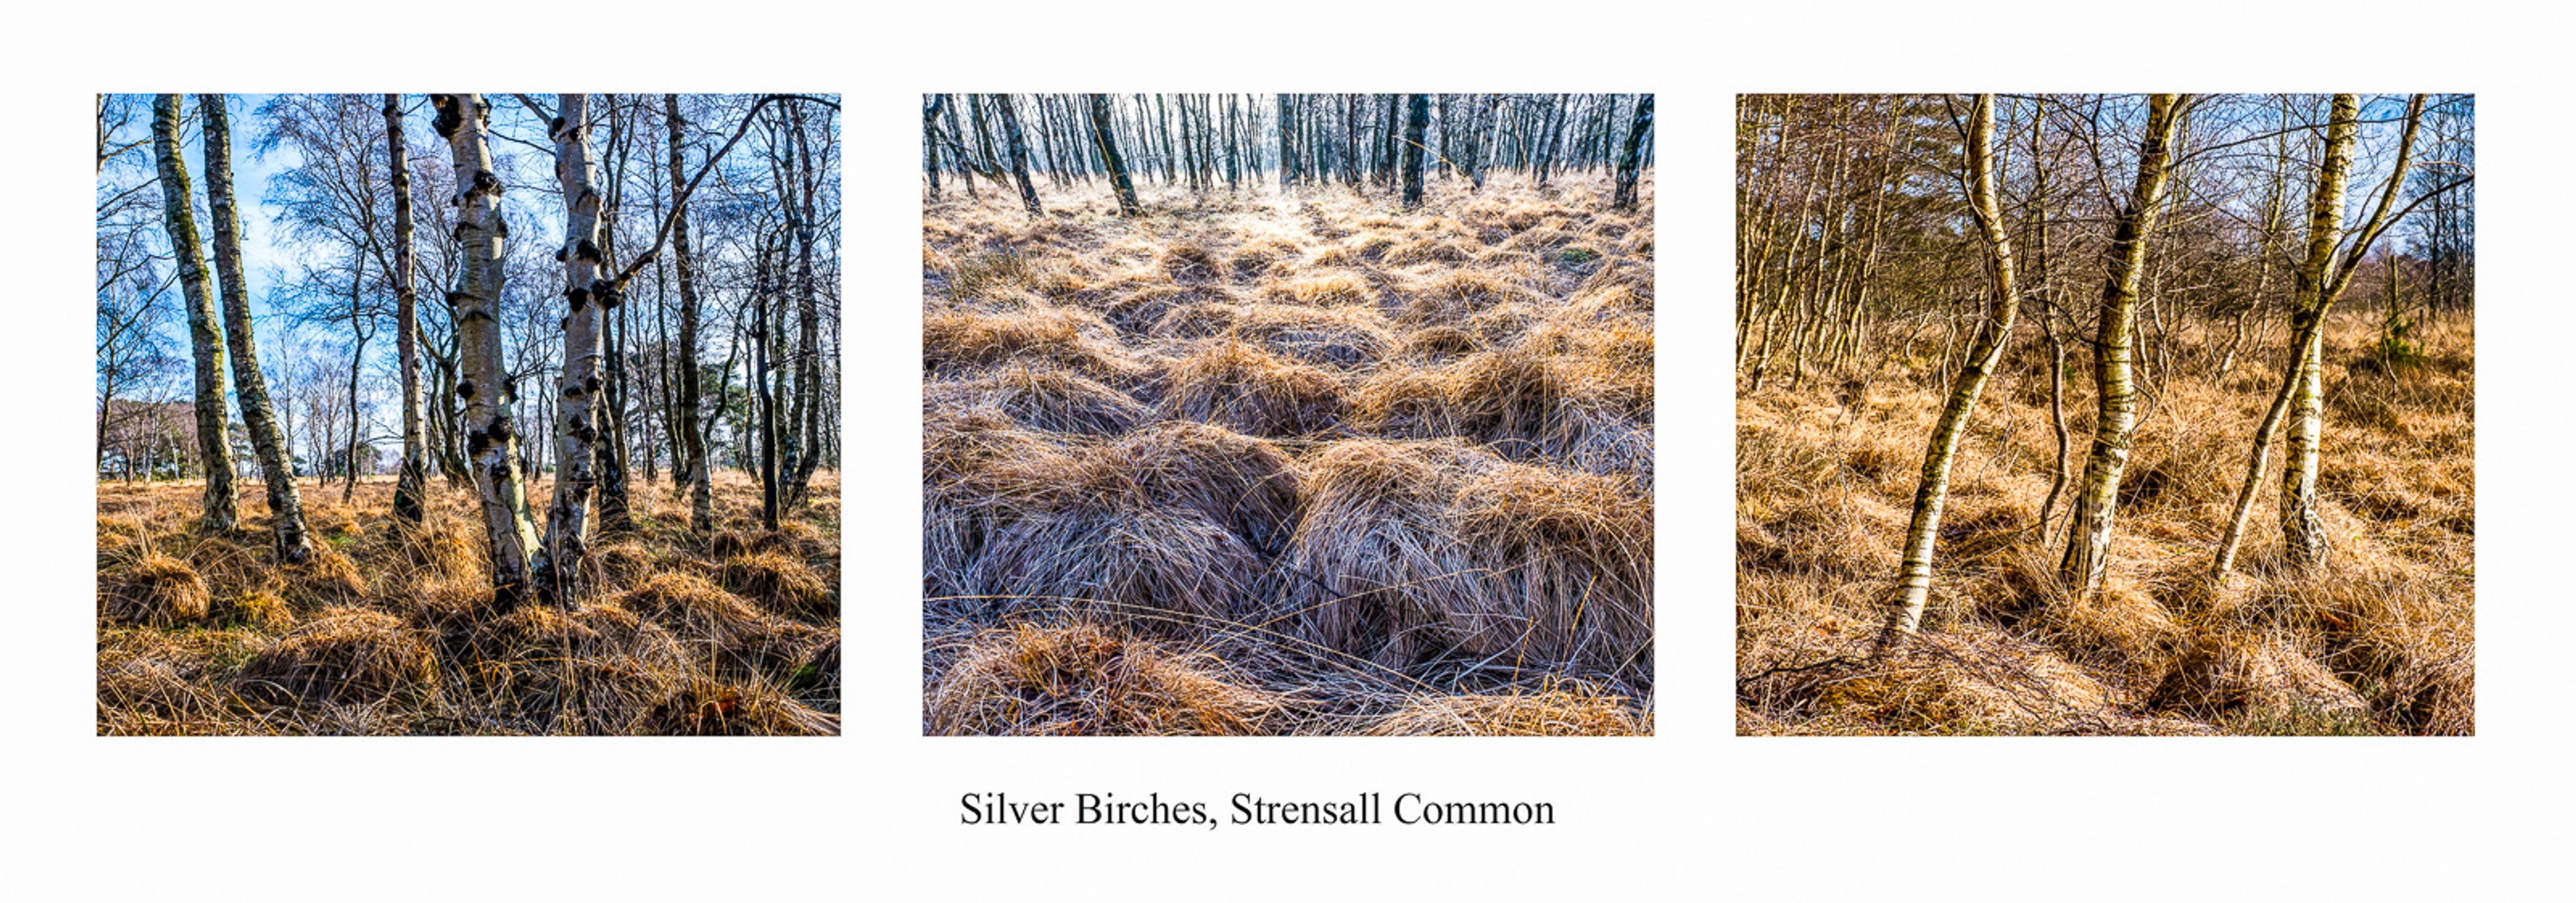 Strensall Common by Allan Harris